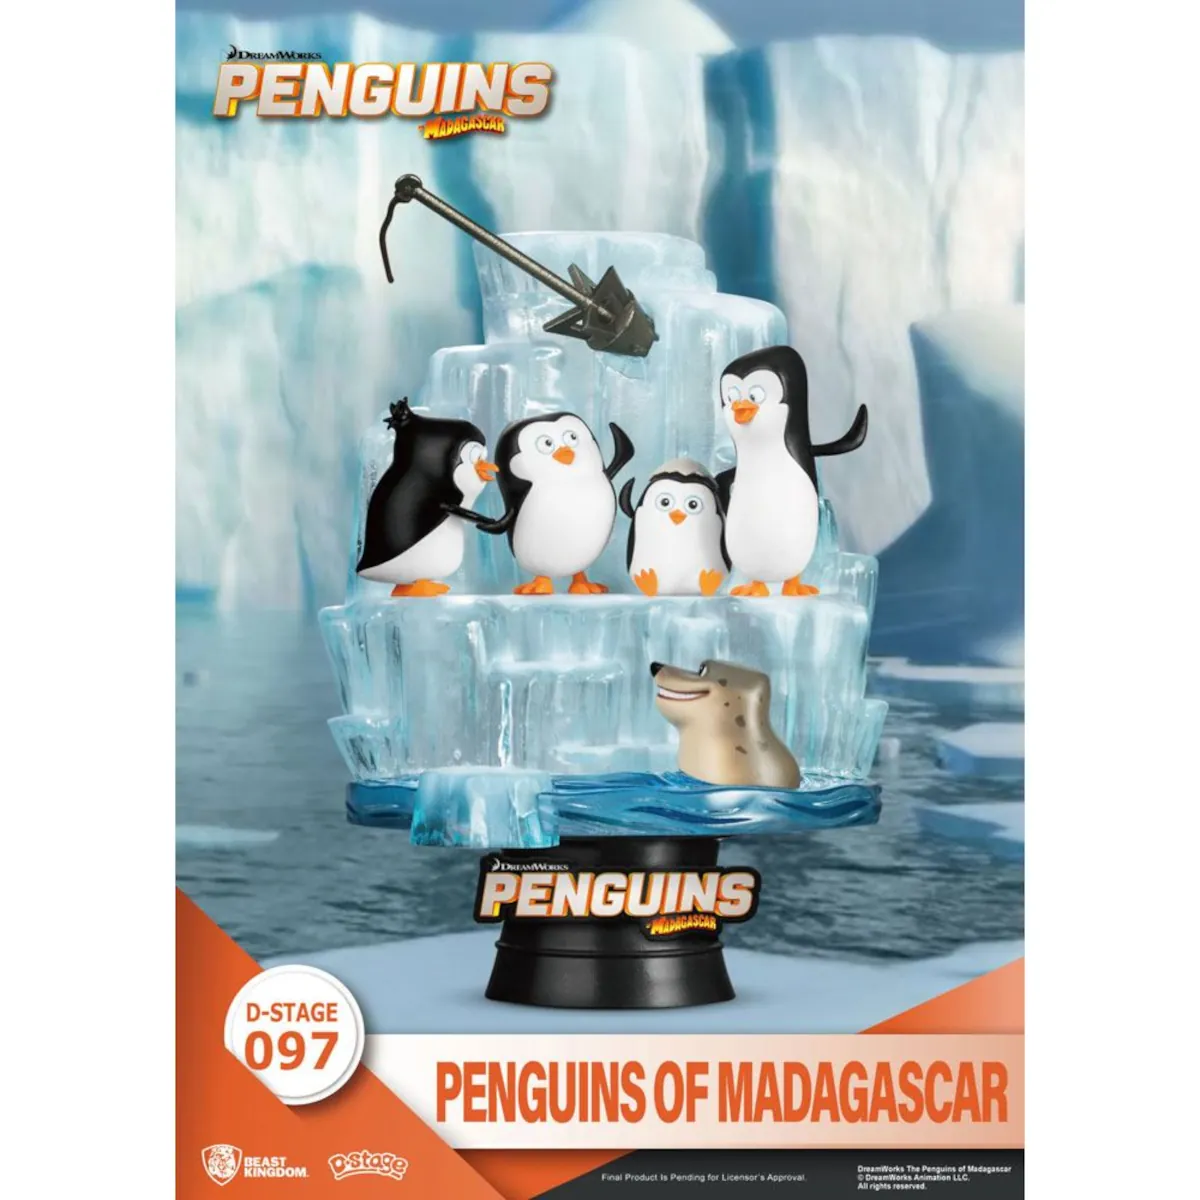 DS-097 Penguins of Madagascar D-Stage 14cm PVC Diorama